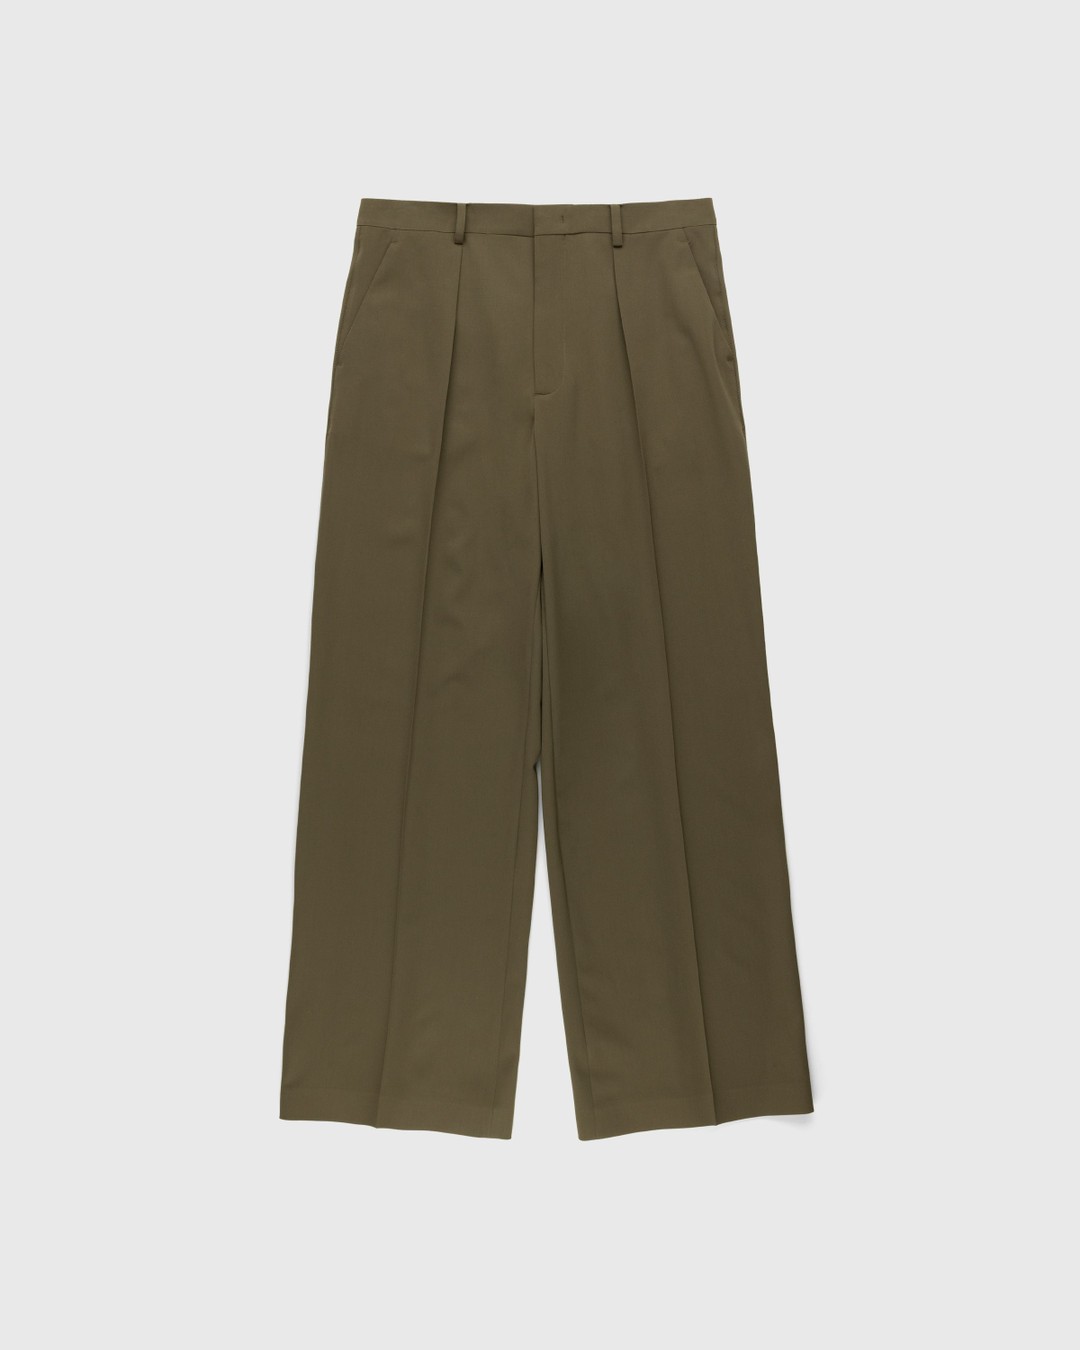 Jean Paul Gaultier – Classic Woven Trouser Khaki - Pants - Brown - Image 1